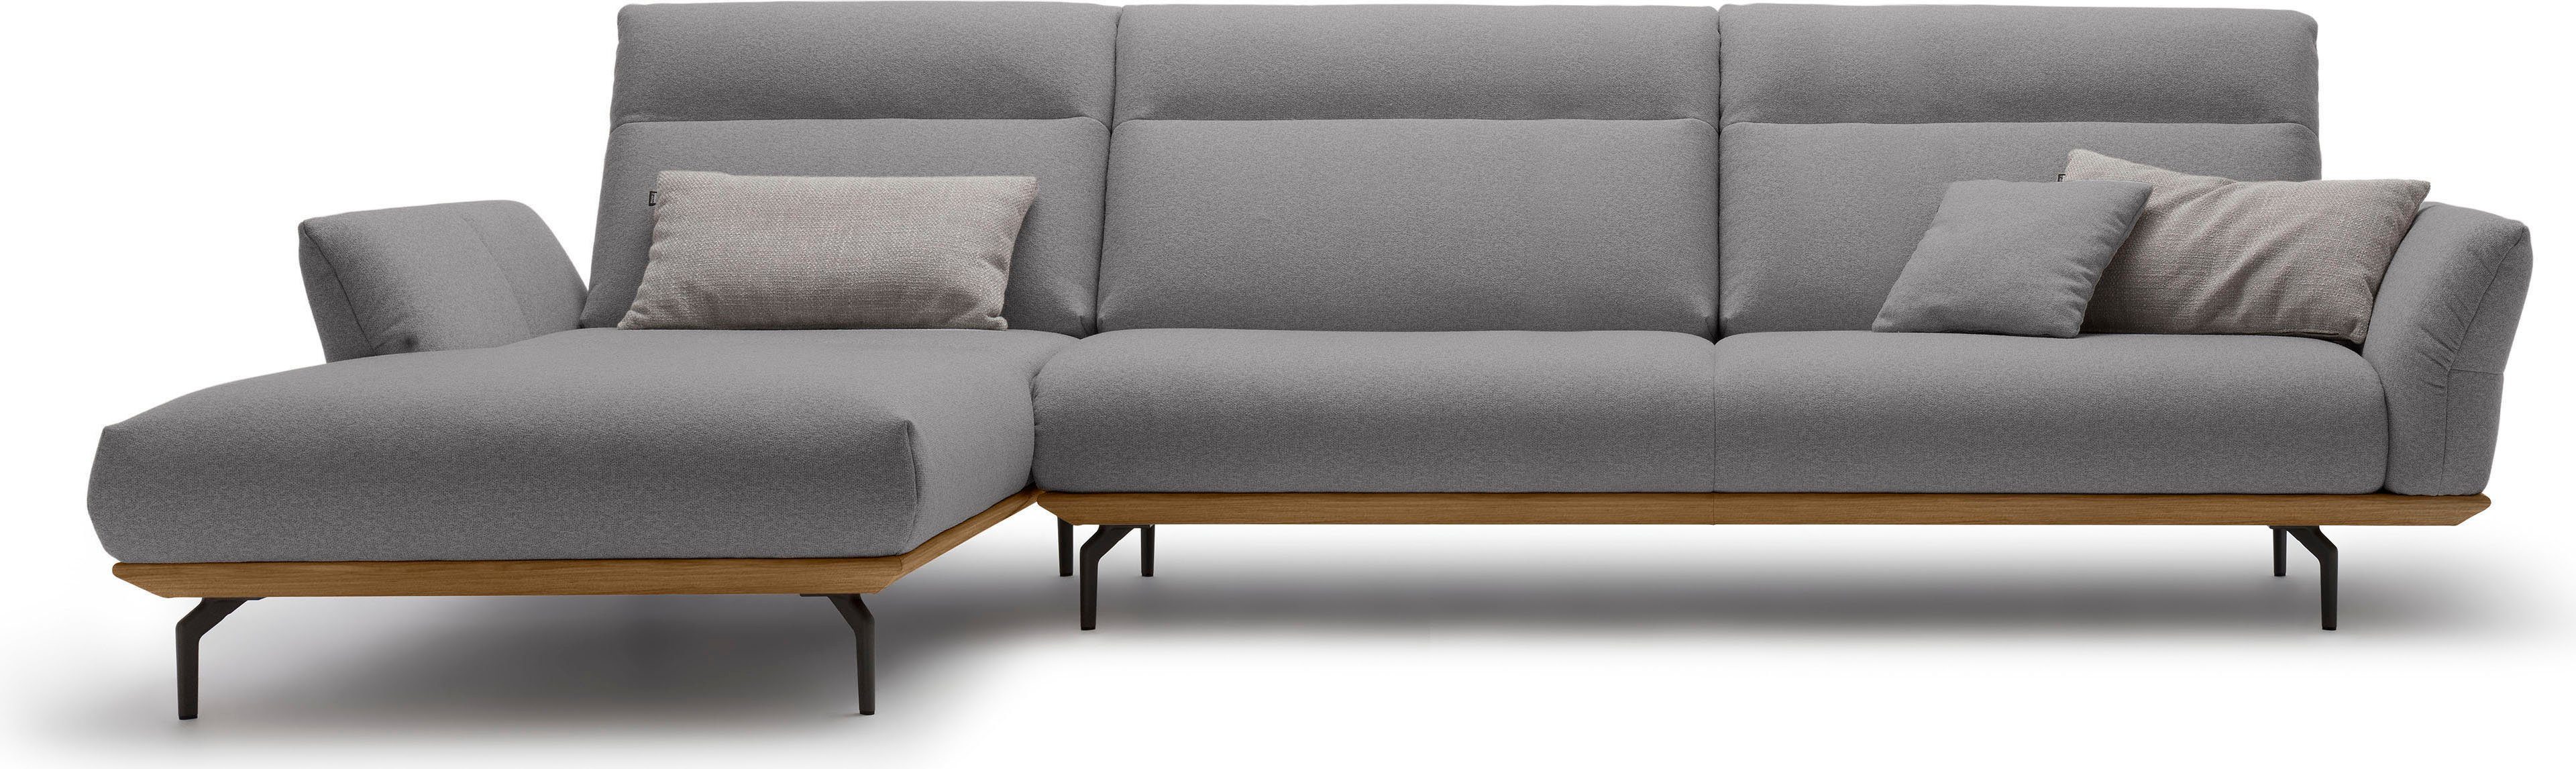 hülsta sofa Ecksofa hs.460, Sockel in Nussbaum, Winkelfüße in Umbragrau, Breite 338 cm